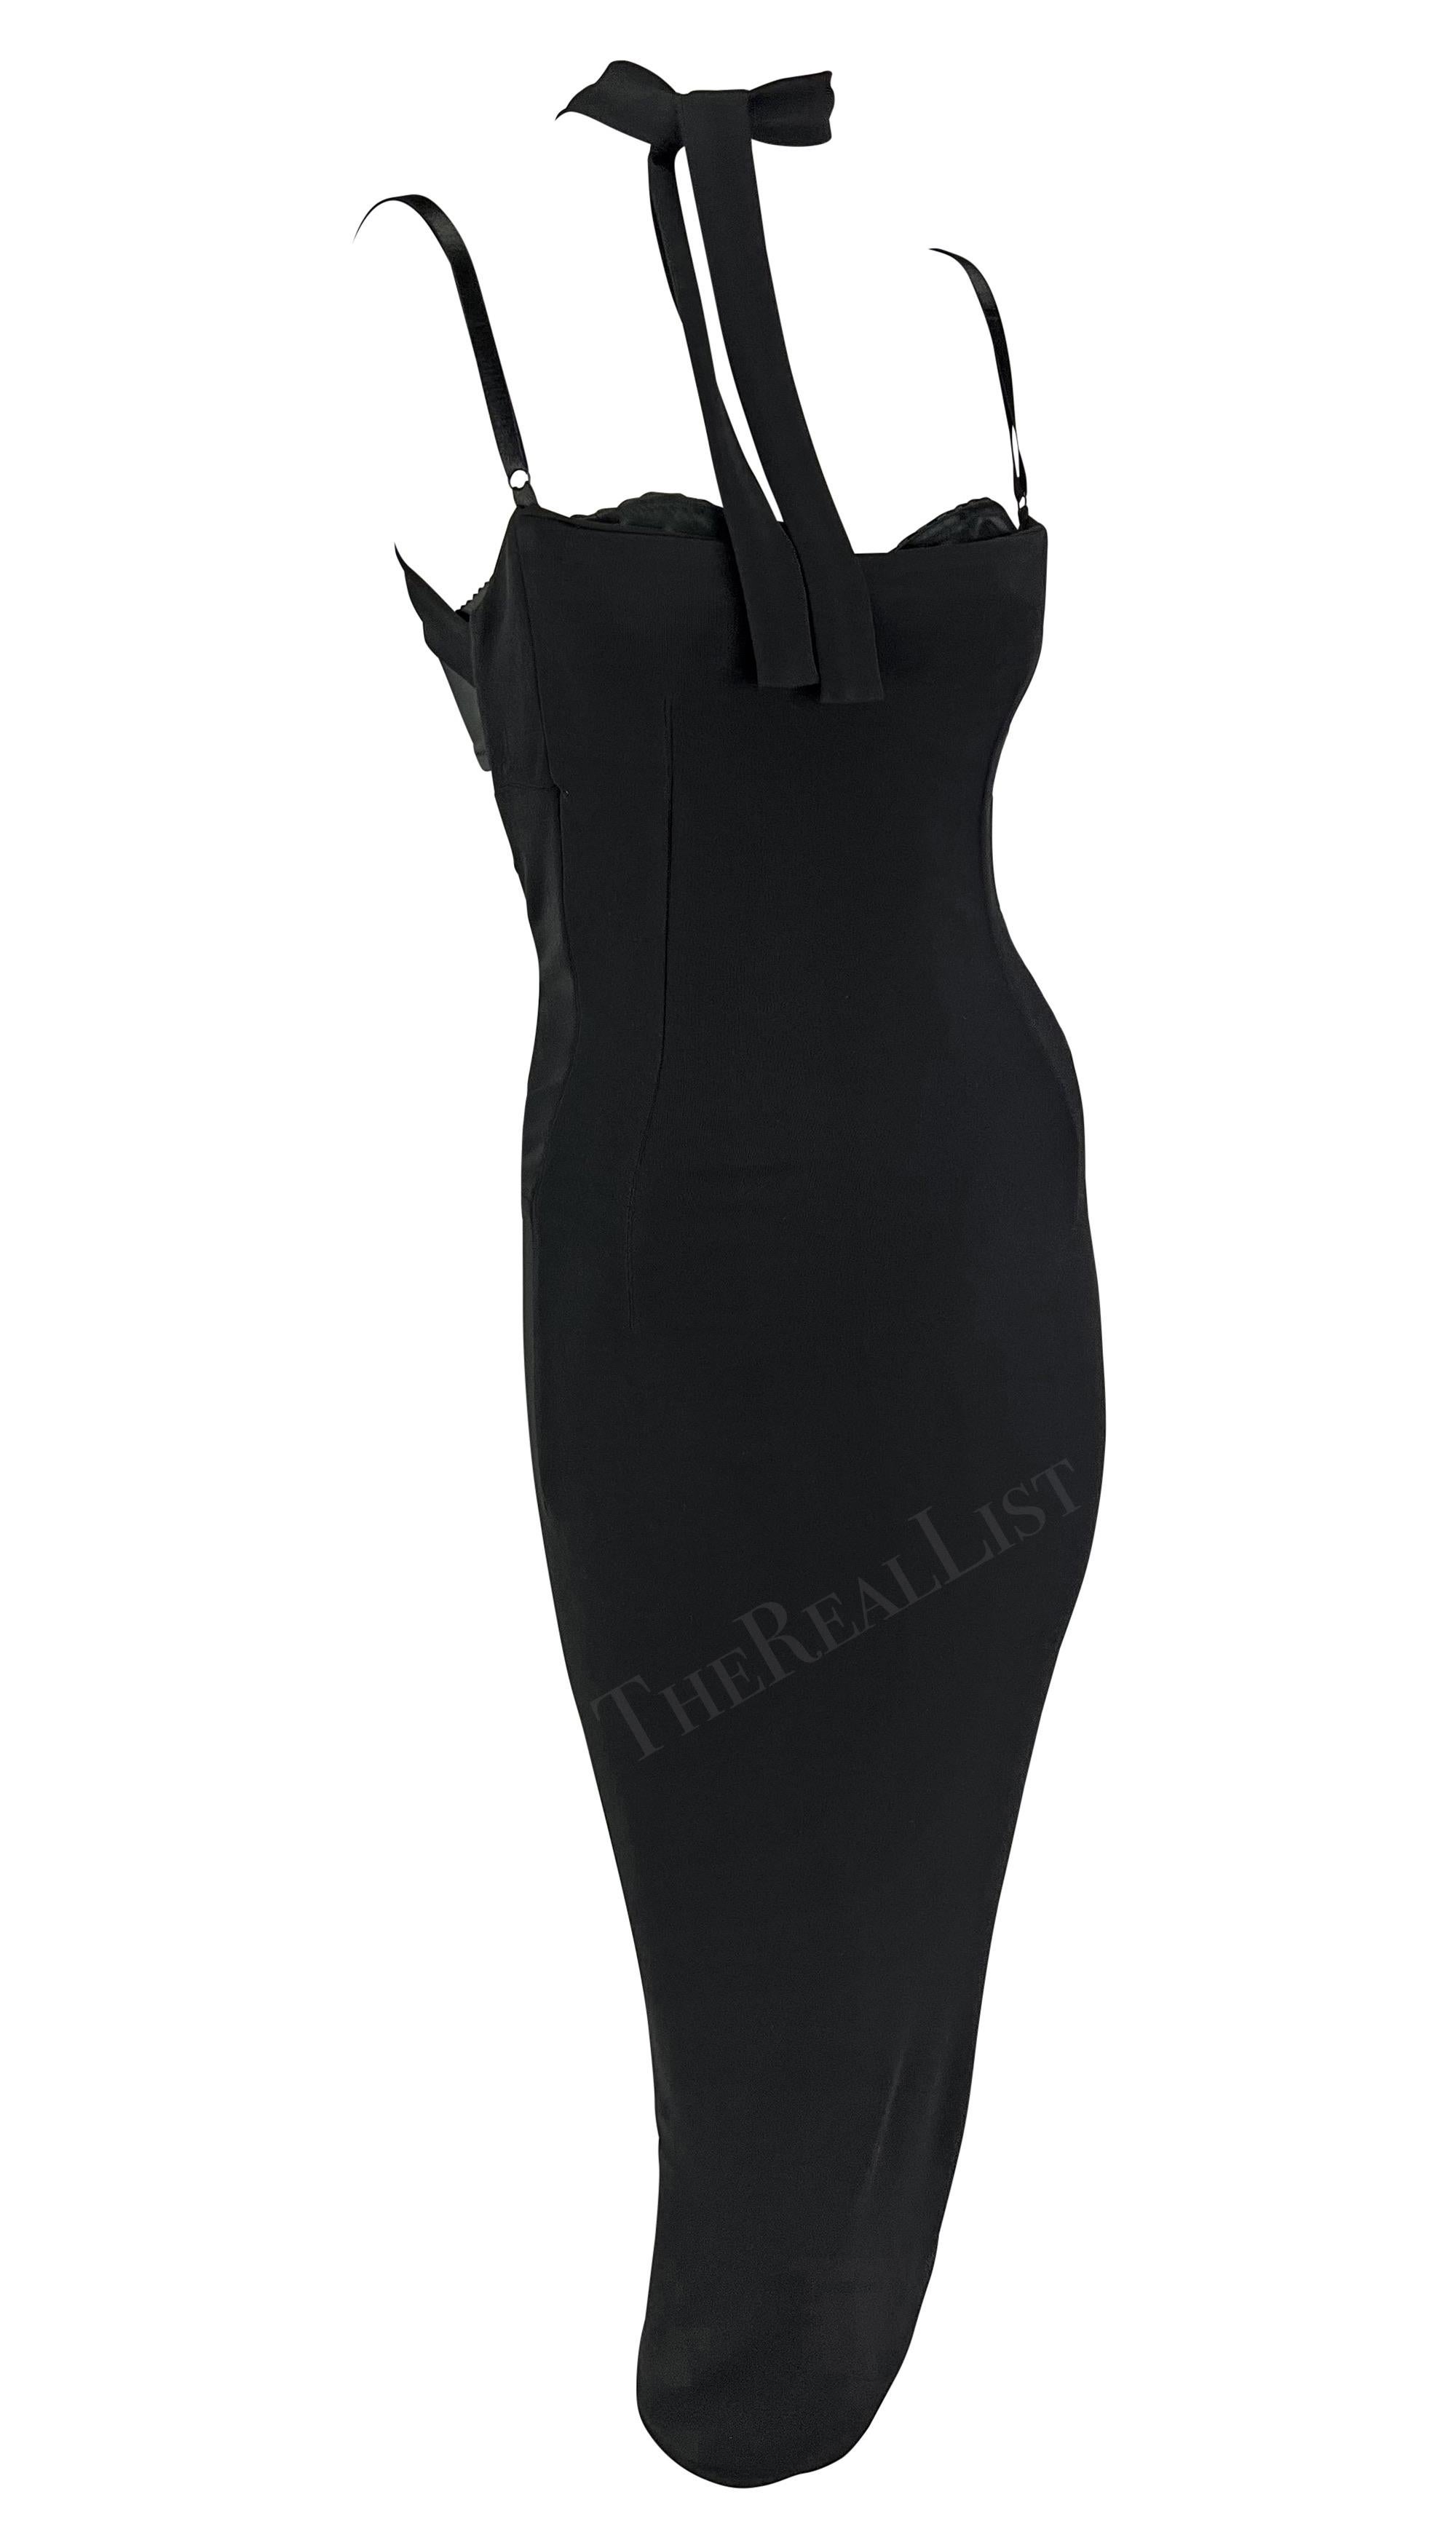 S/S 2001 Dolce & Gabbana Black Bodycon Strap Backless Runway Dress For Sale 3